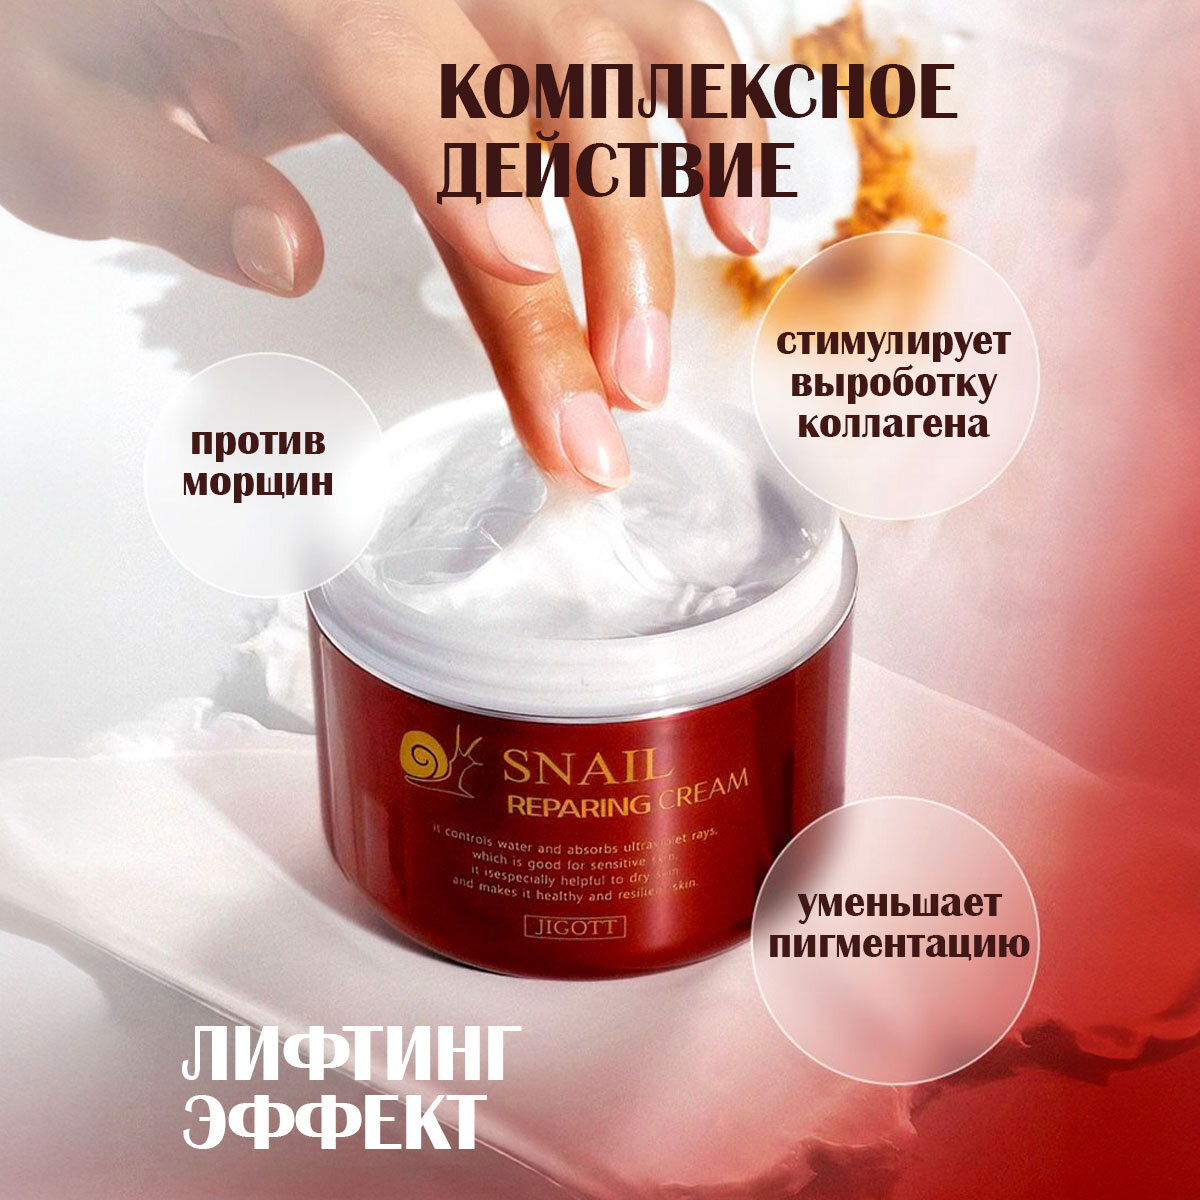 Jigott Snail Reparing Cream Восстанавливающий крем для лица с муцином улитки, 100 г